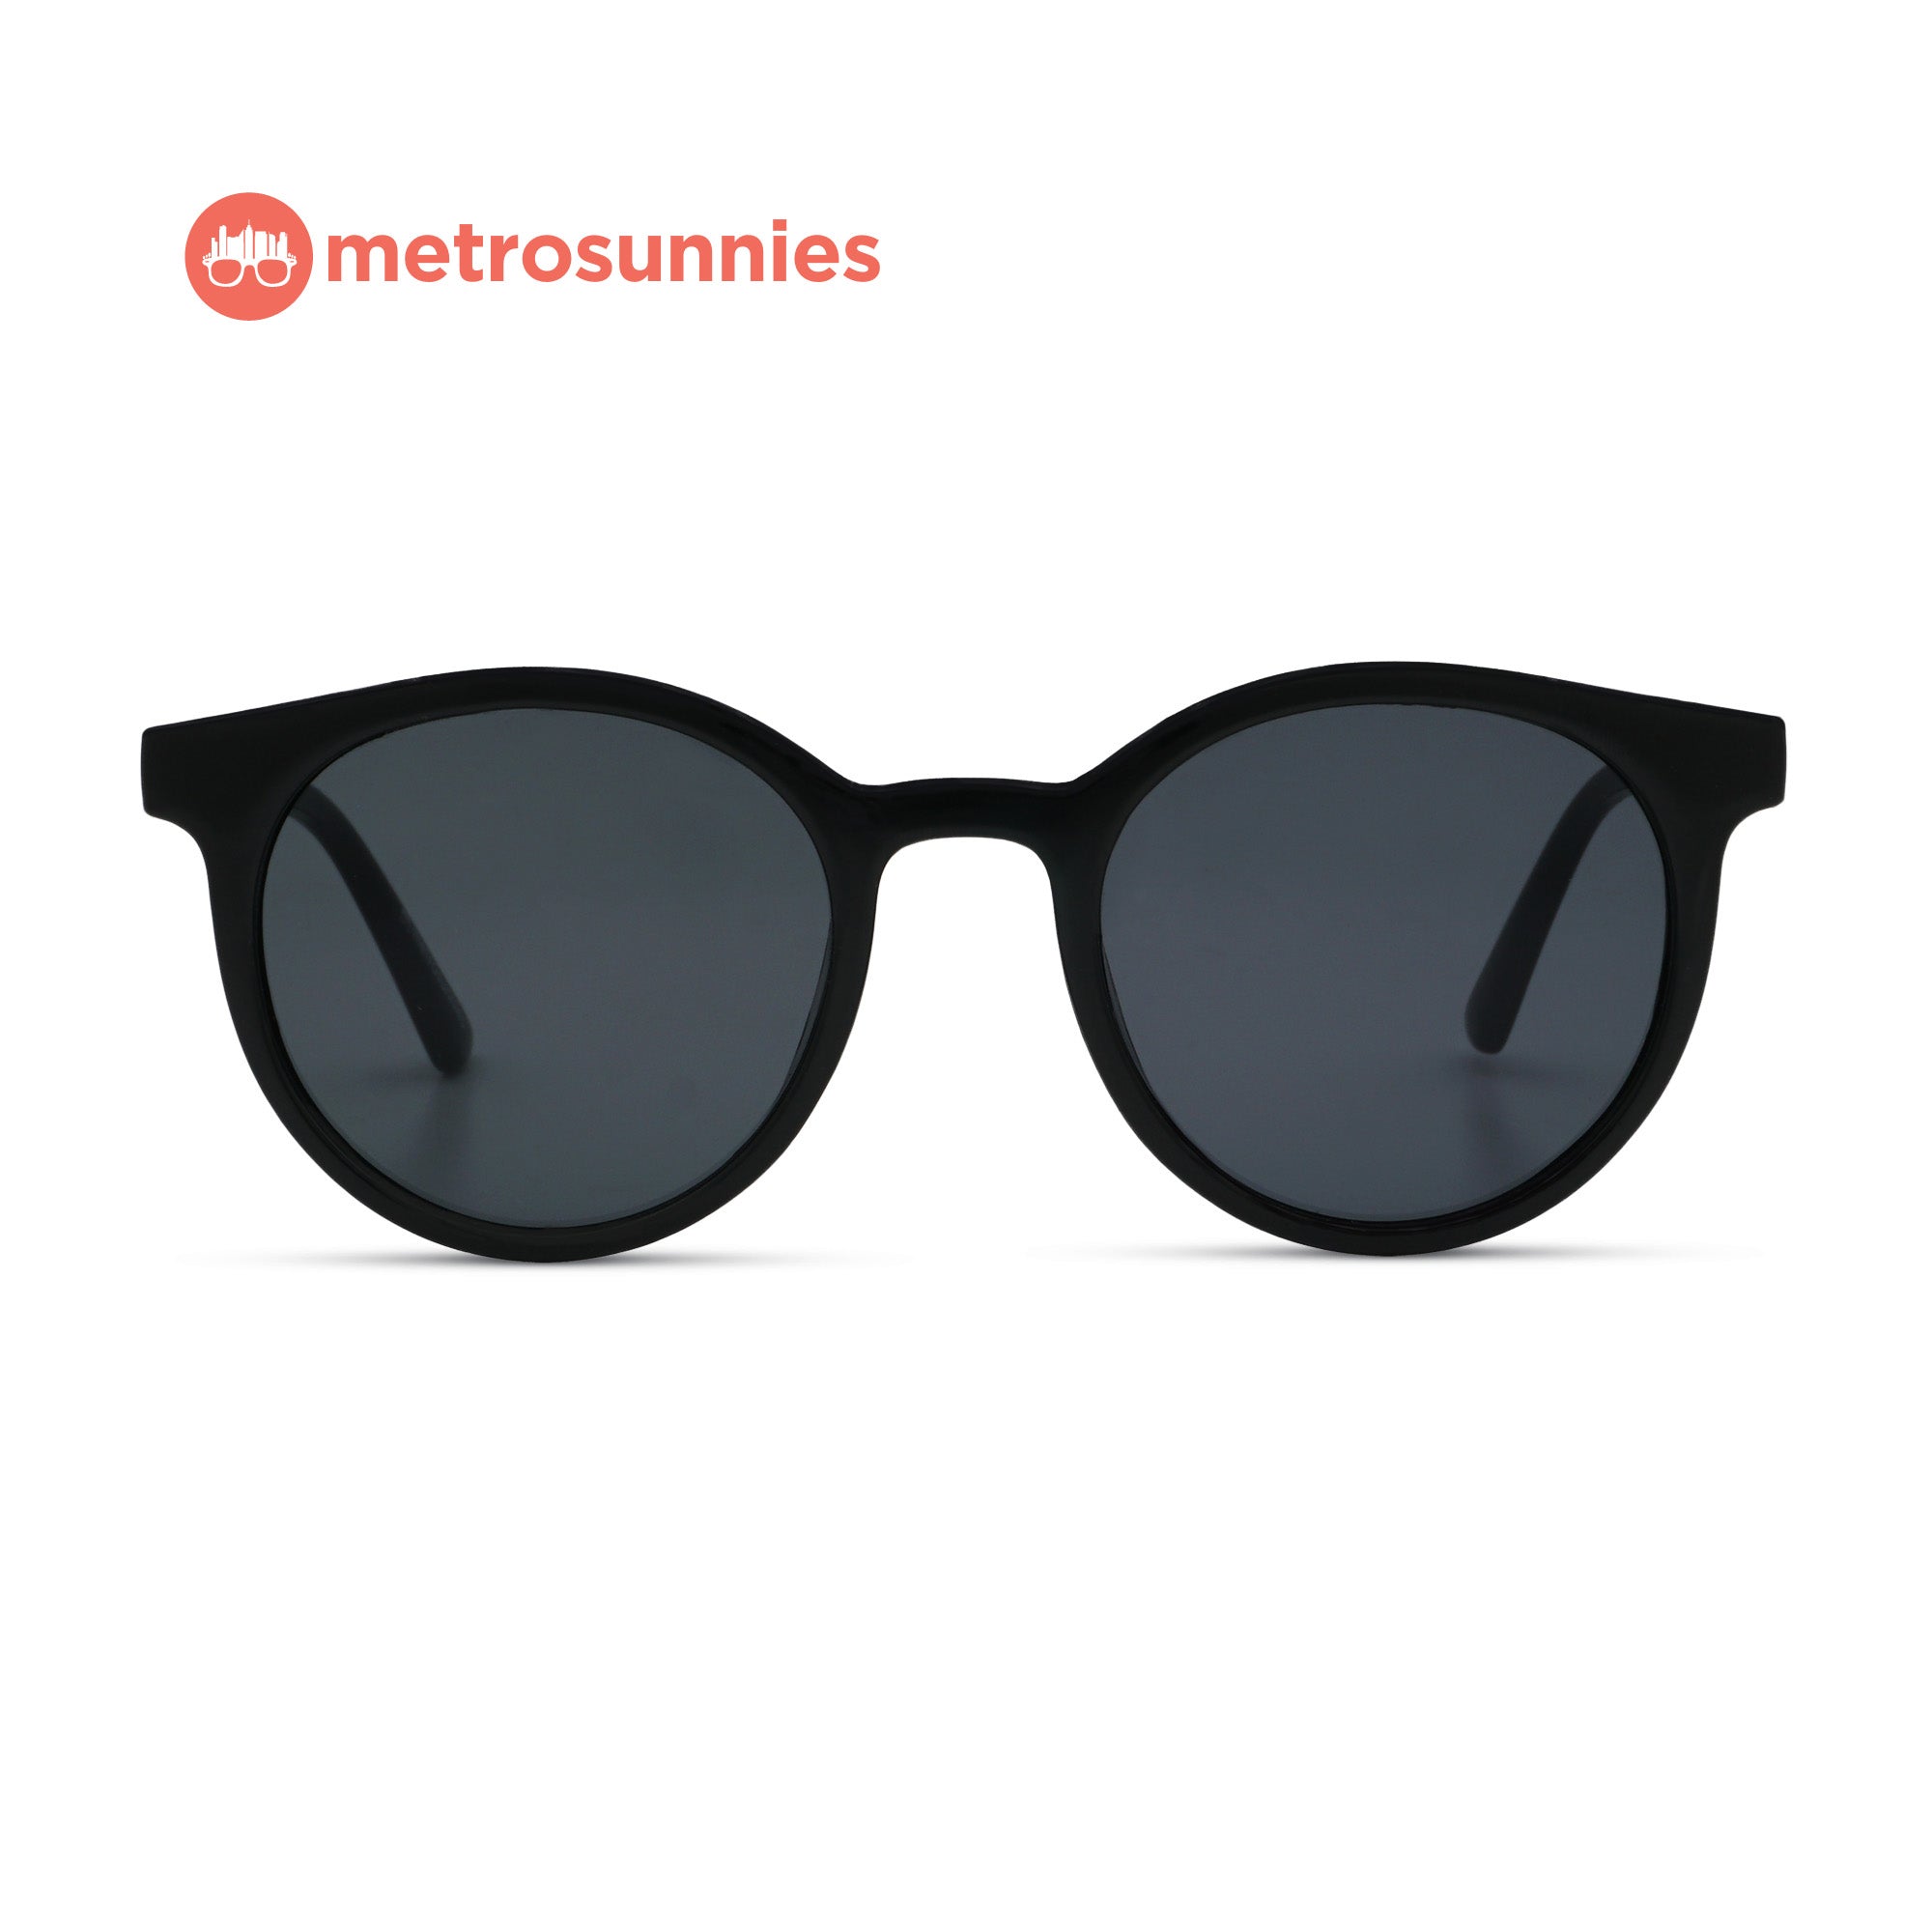 MetroSunnies Archie Sunnies (Black) / Sunglasses with UV400 Protection / Fashion Eyewear Unisex